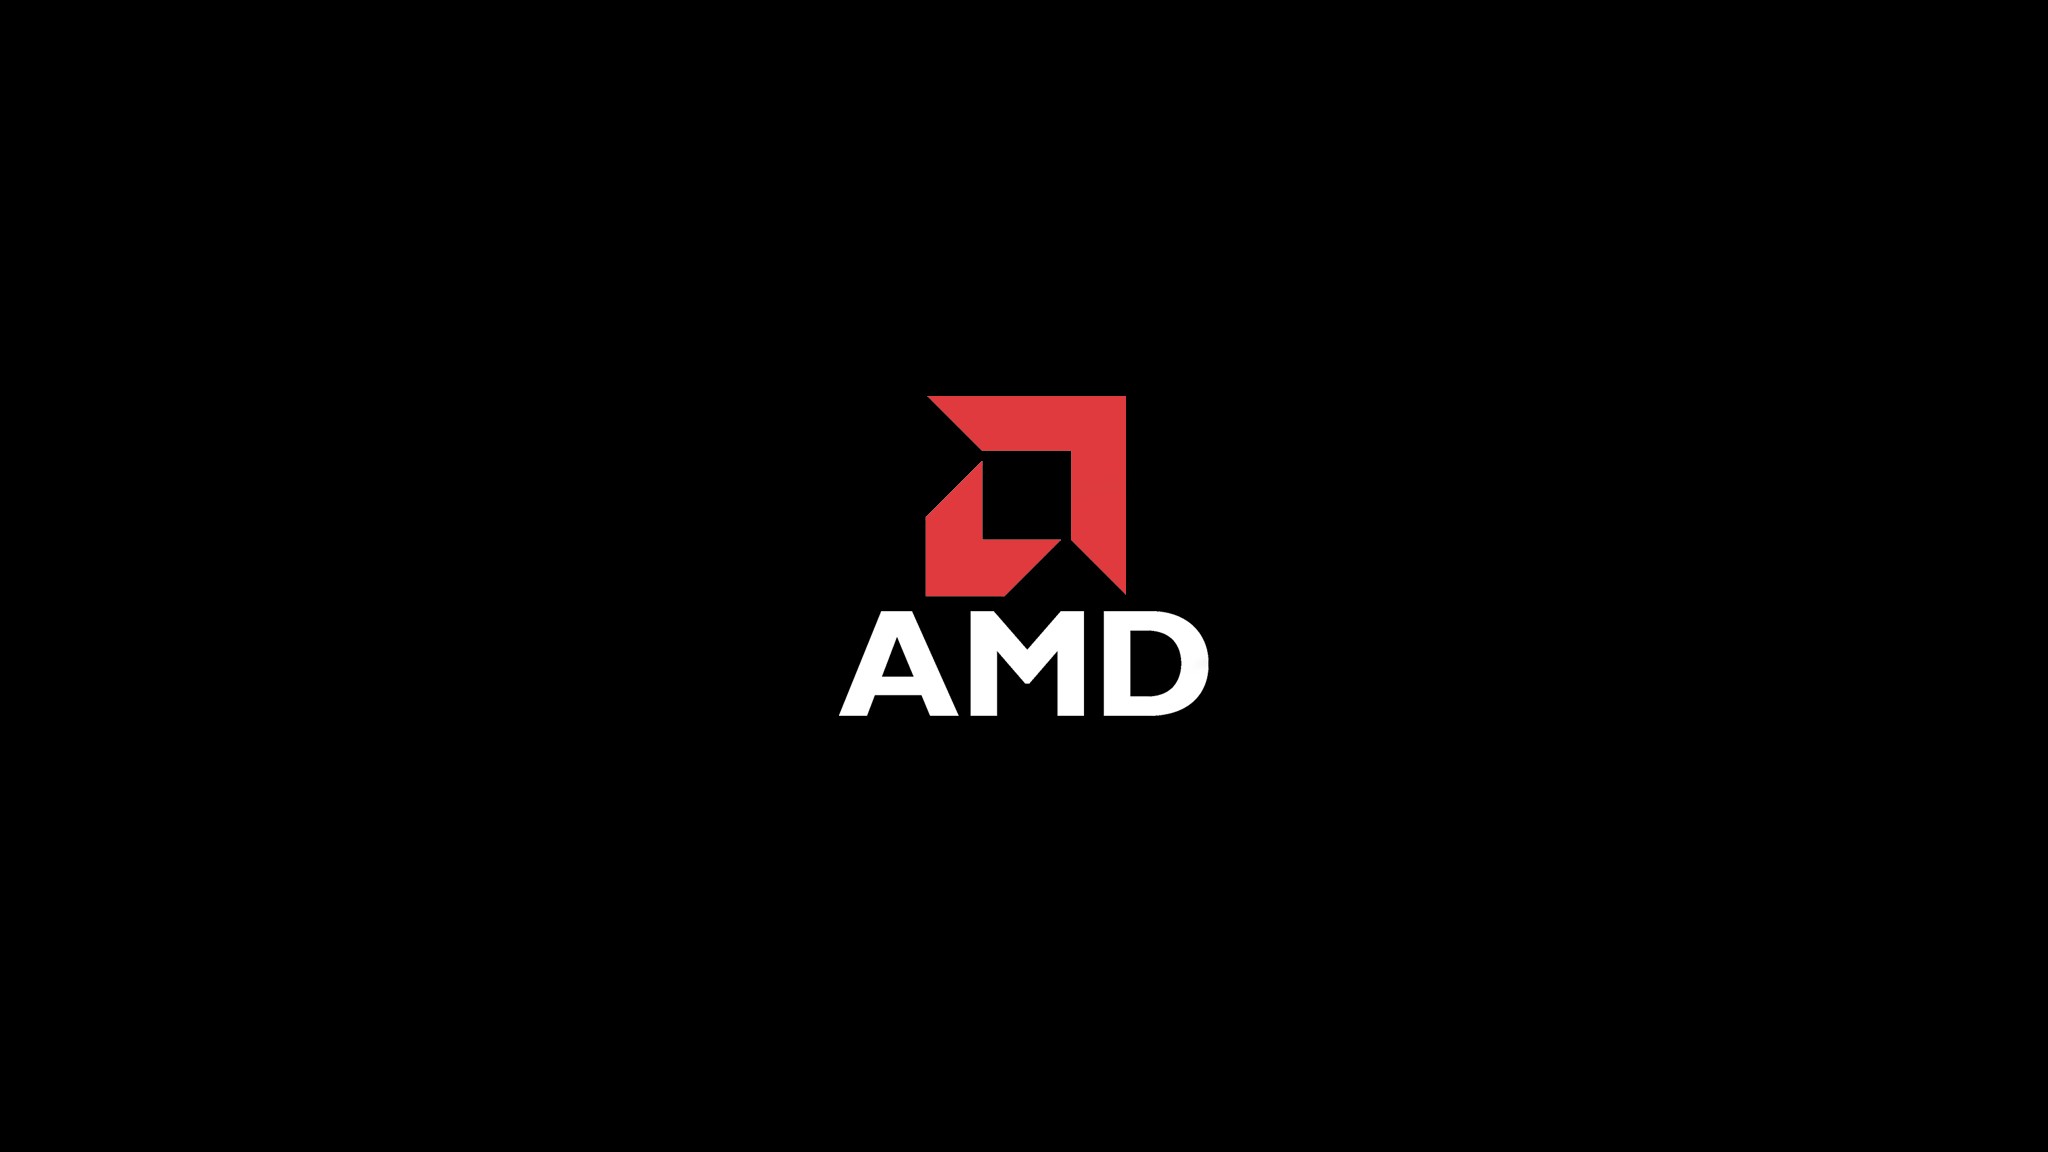 General 2048x1152 technology CPU simple background AMD black background logo minimalism brand